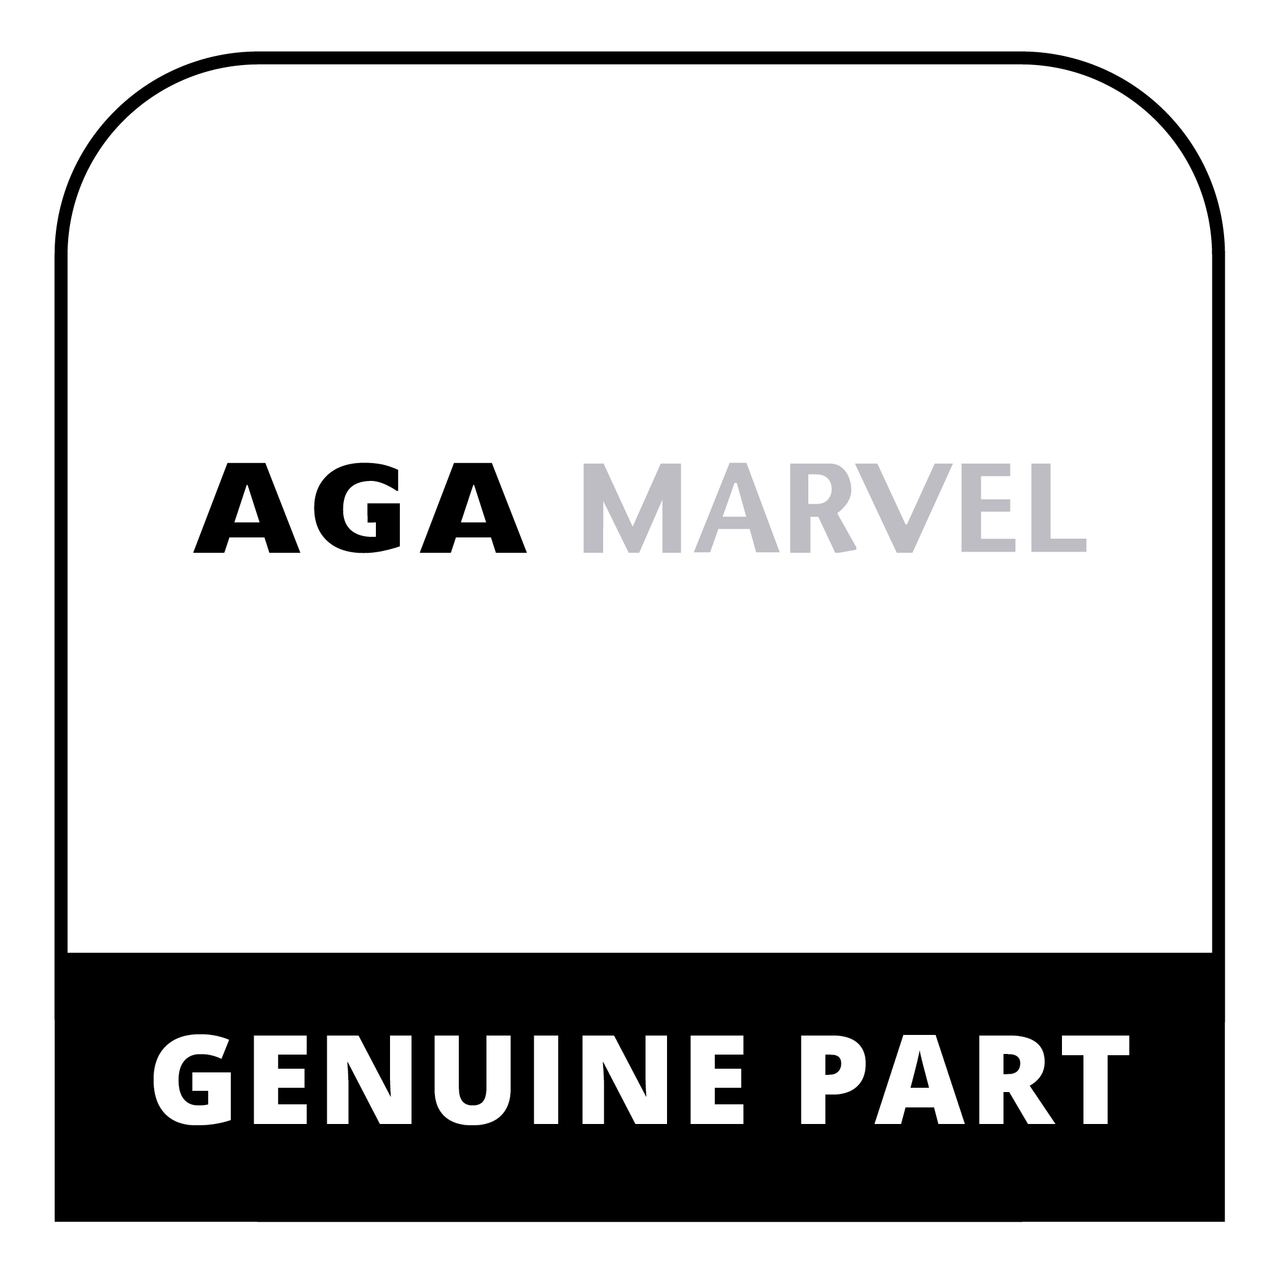 AGA Marvel RS4M38978 - Plate Damper Positioning Smf - Genuine AGA Marvel Part